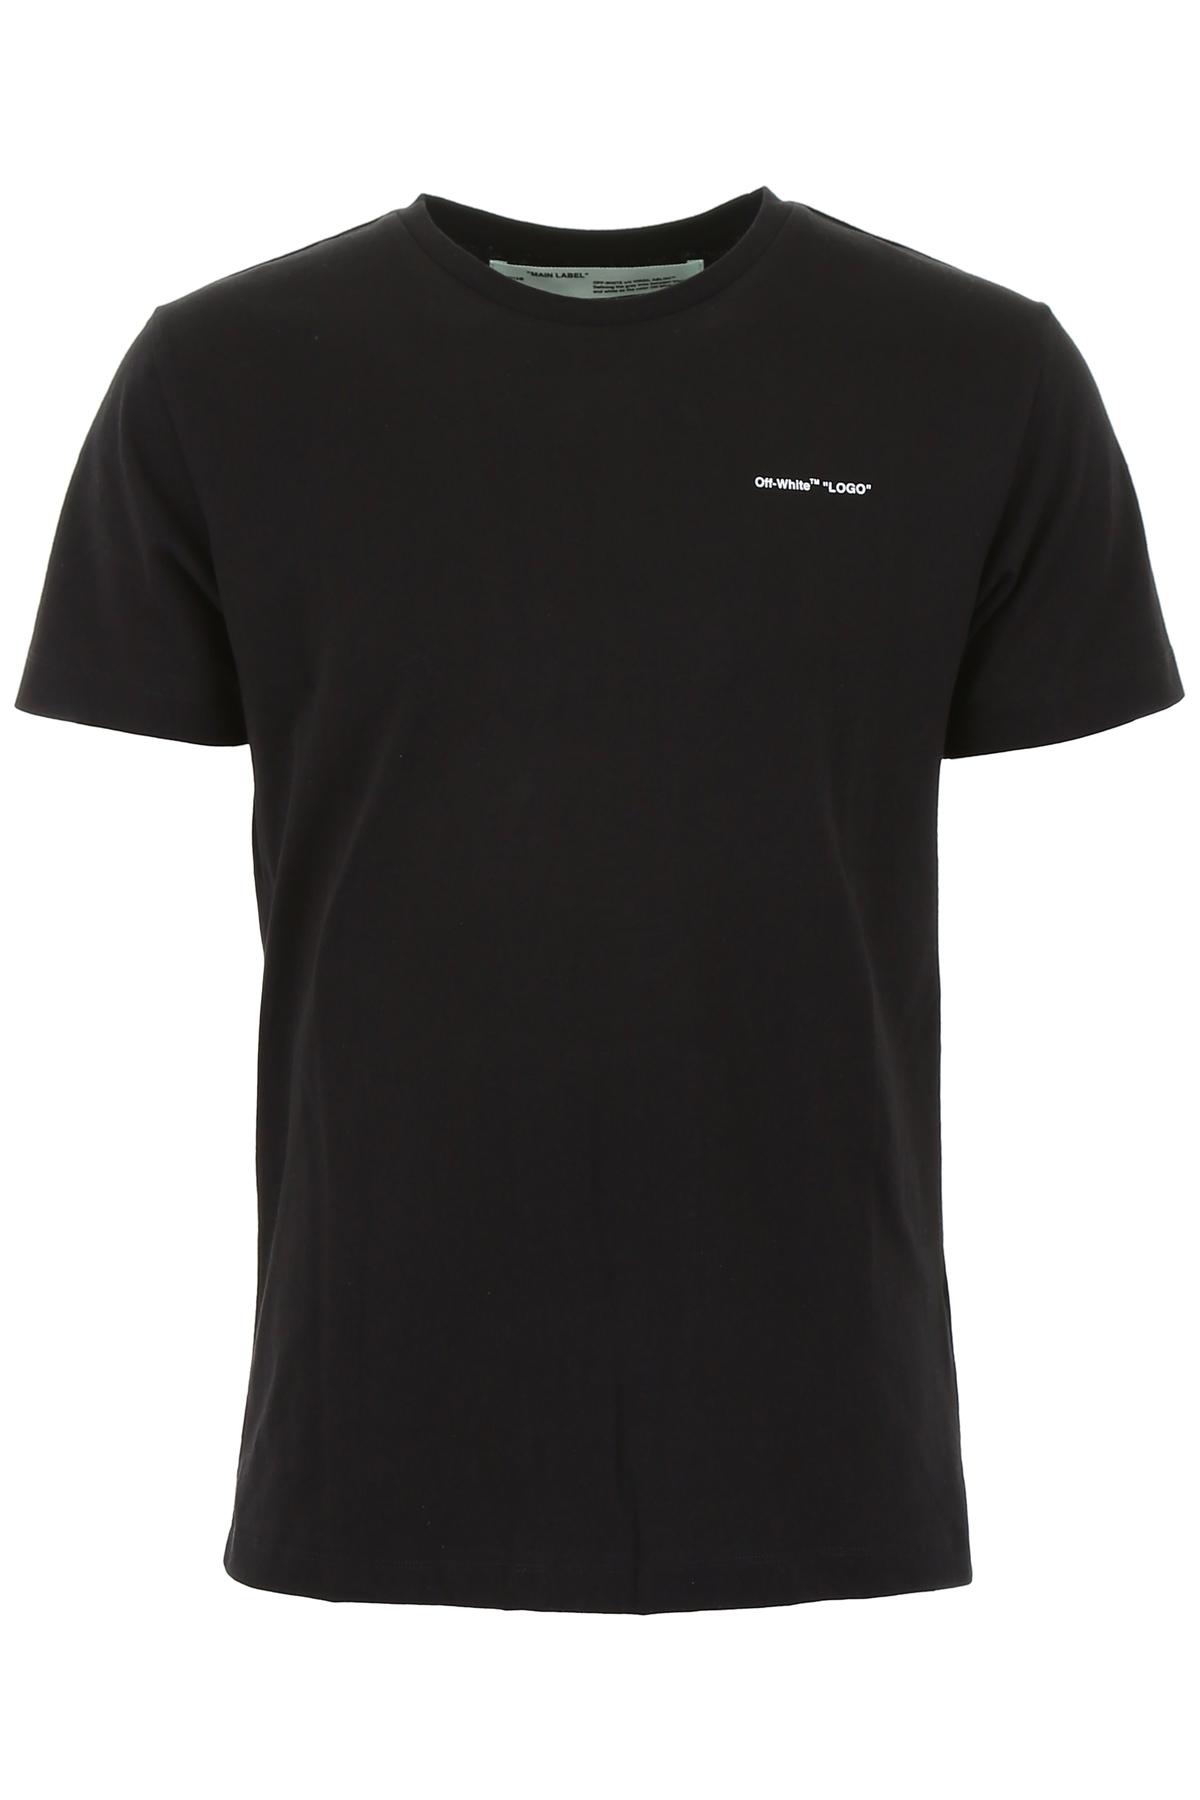 Off-White c/o Virgil Abloh Logo Print T-shirt in Black for Men - Save